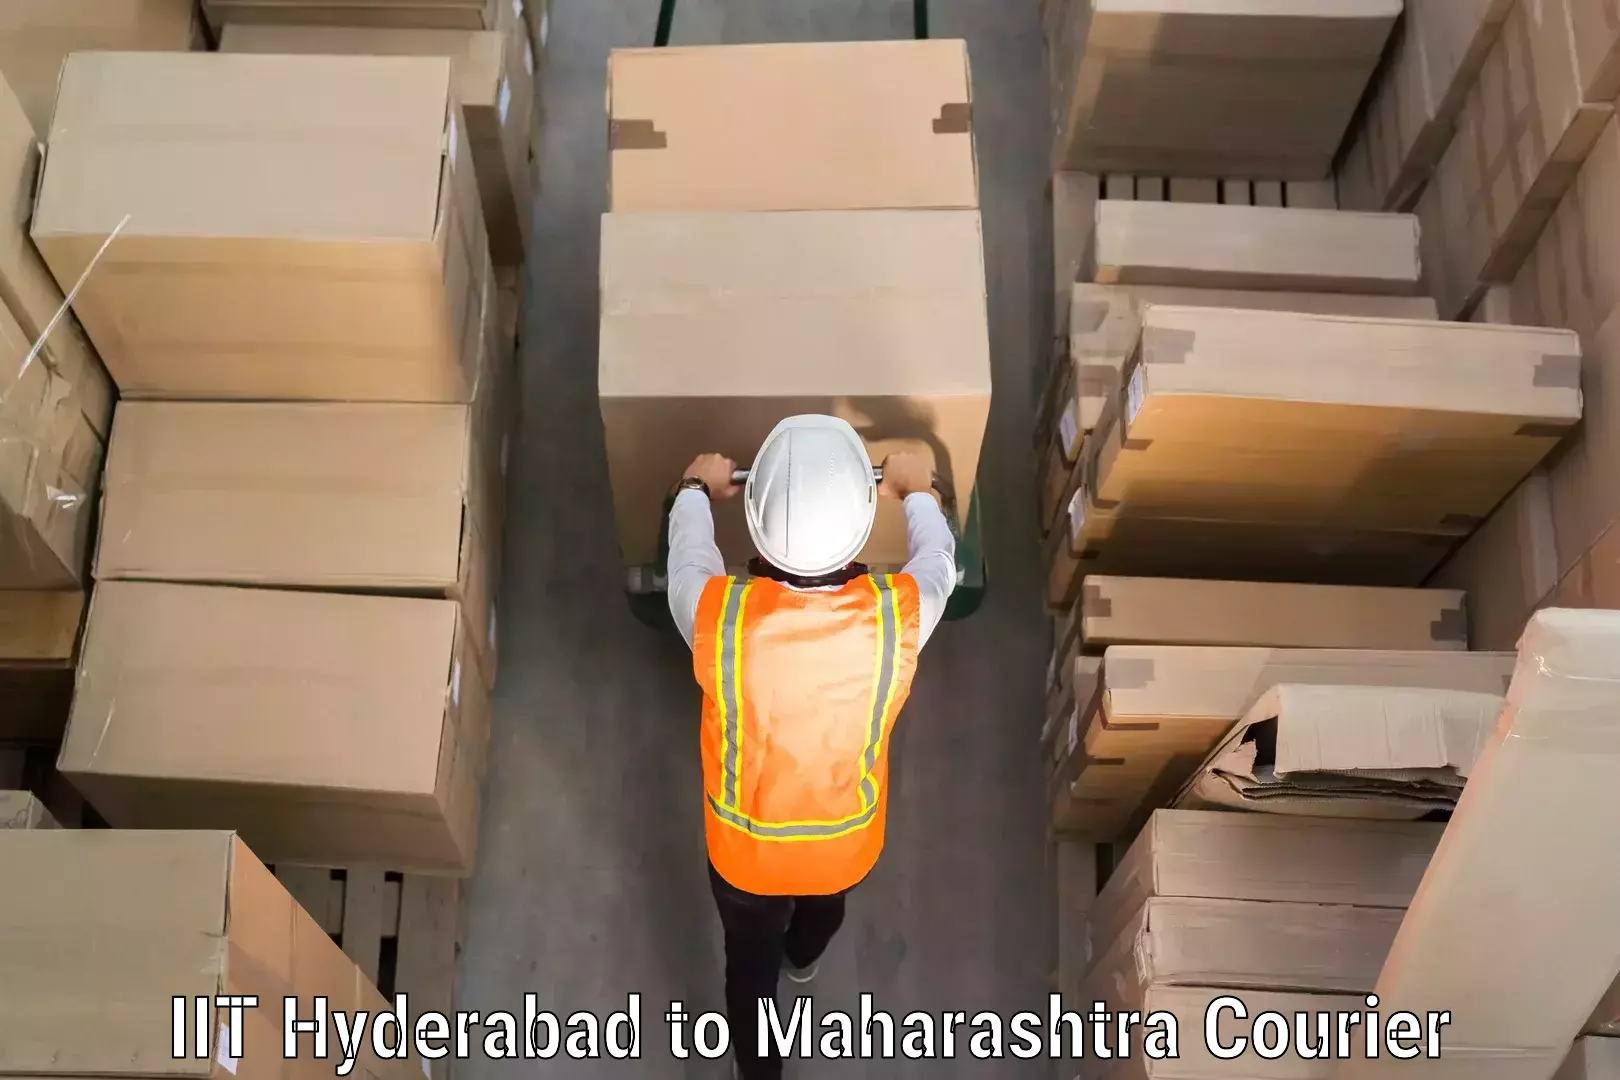 Luggage shipment specialists IIT Hyderabad to Dadar